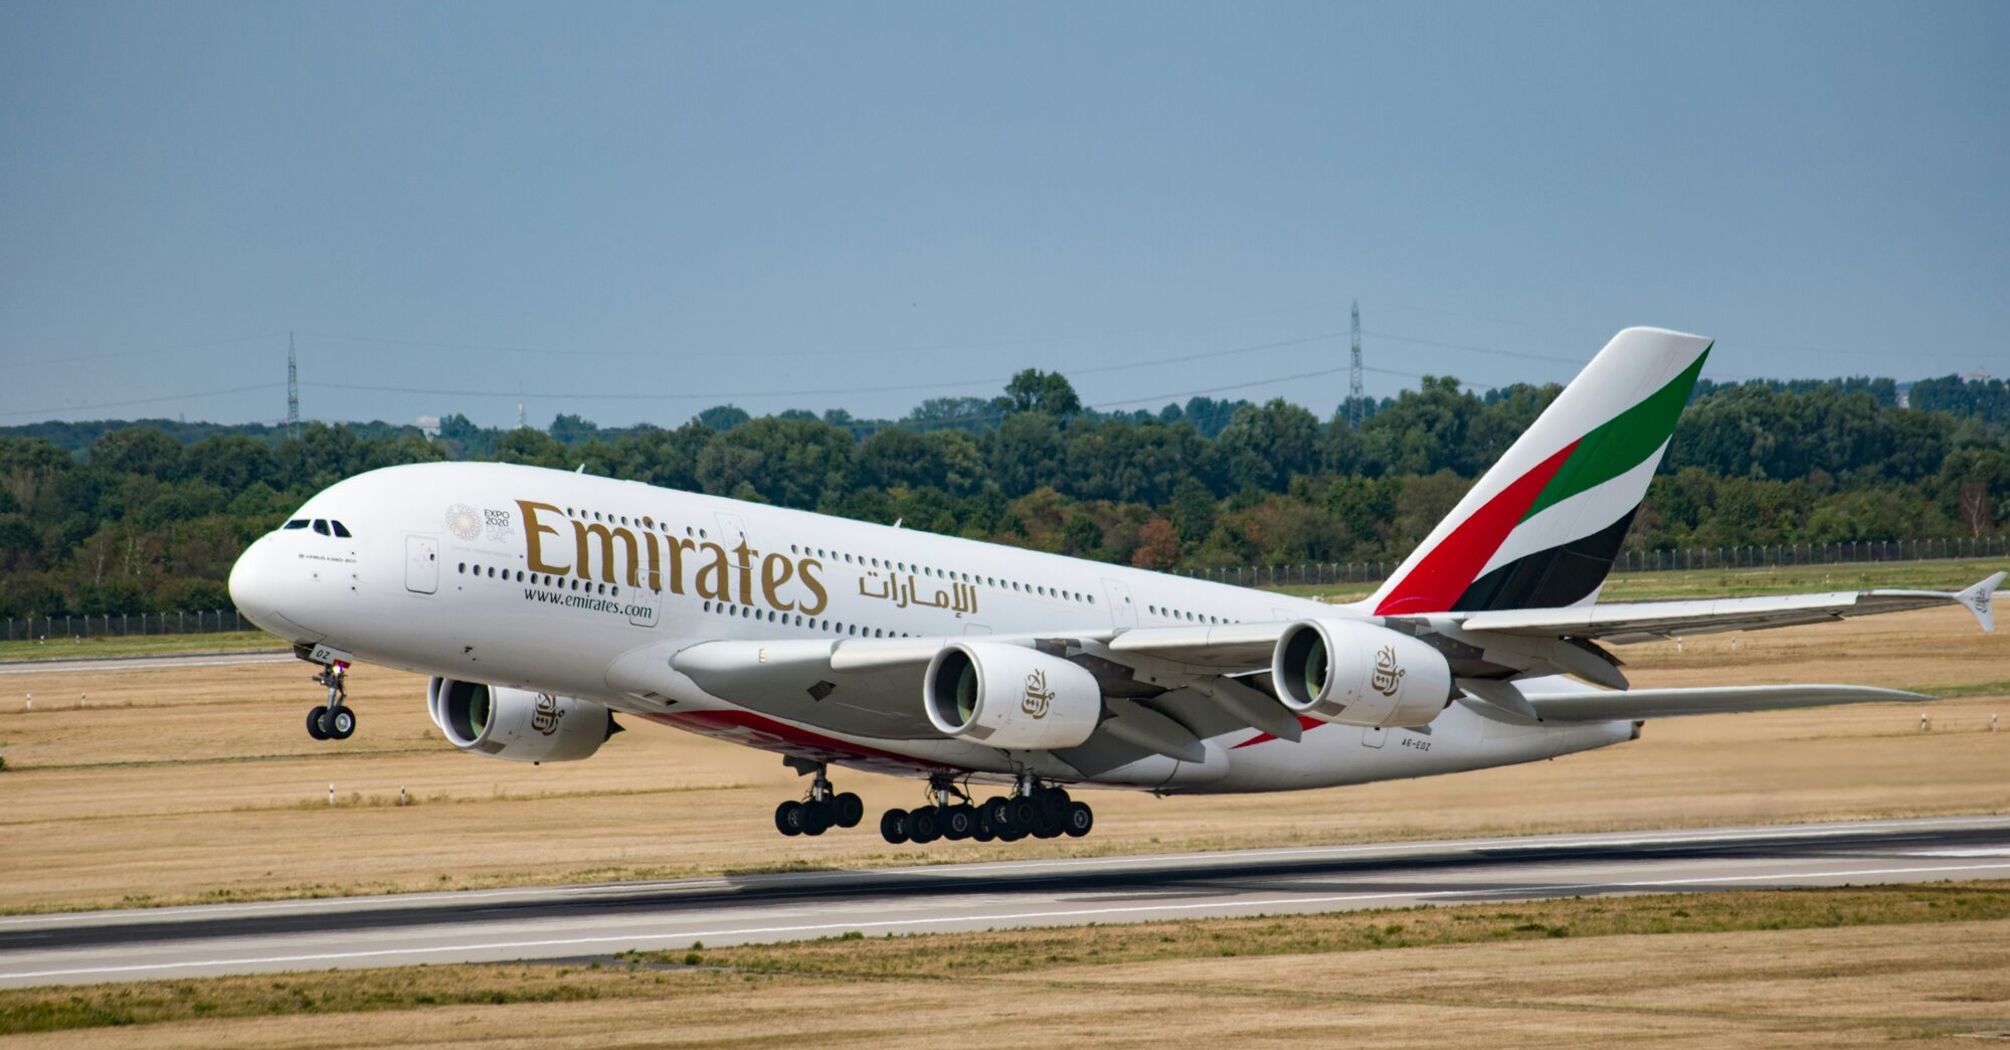 White Emirates aircraft